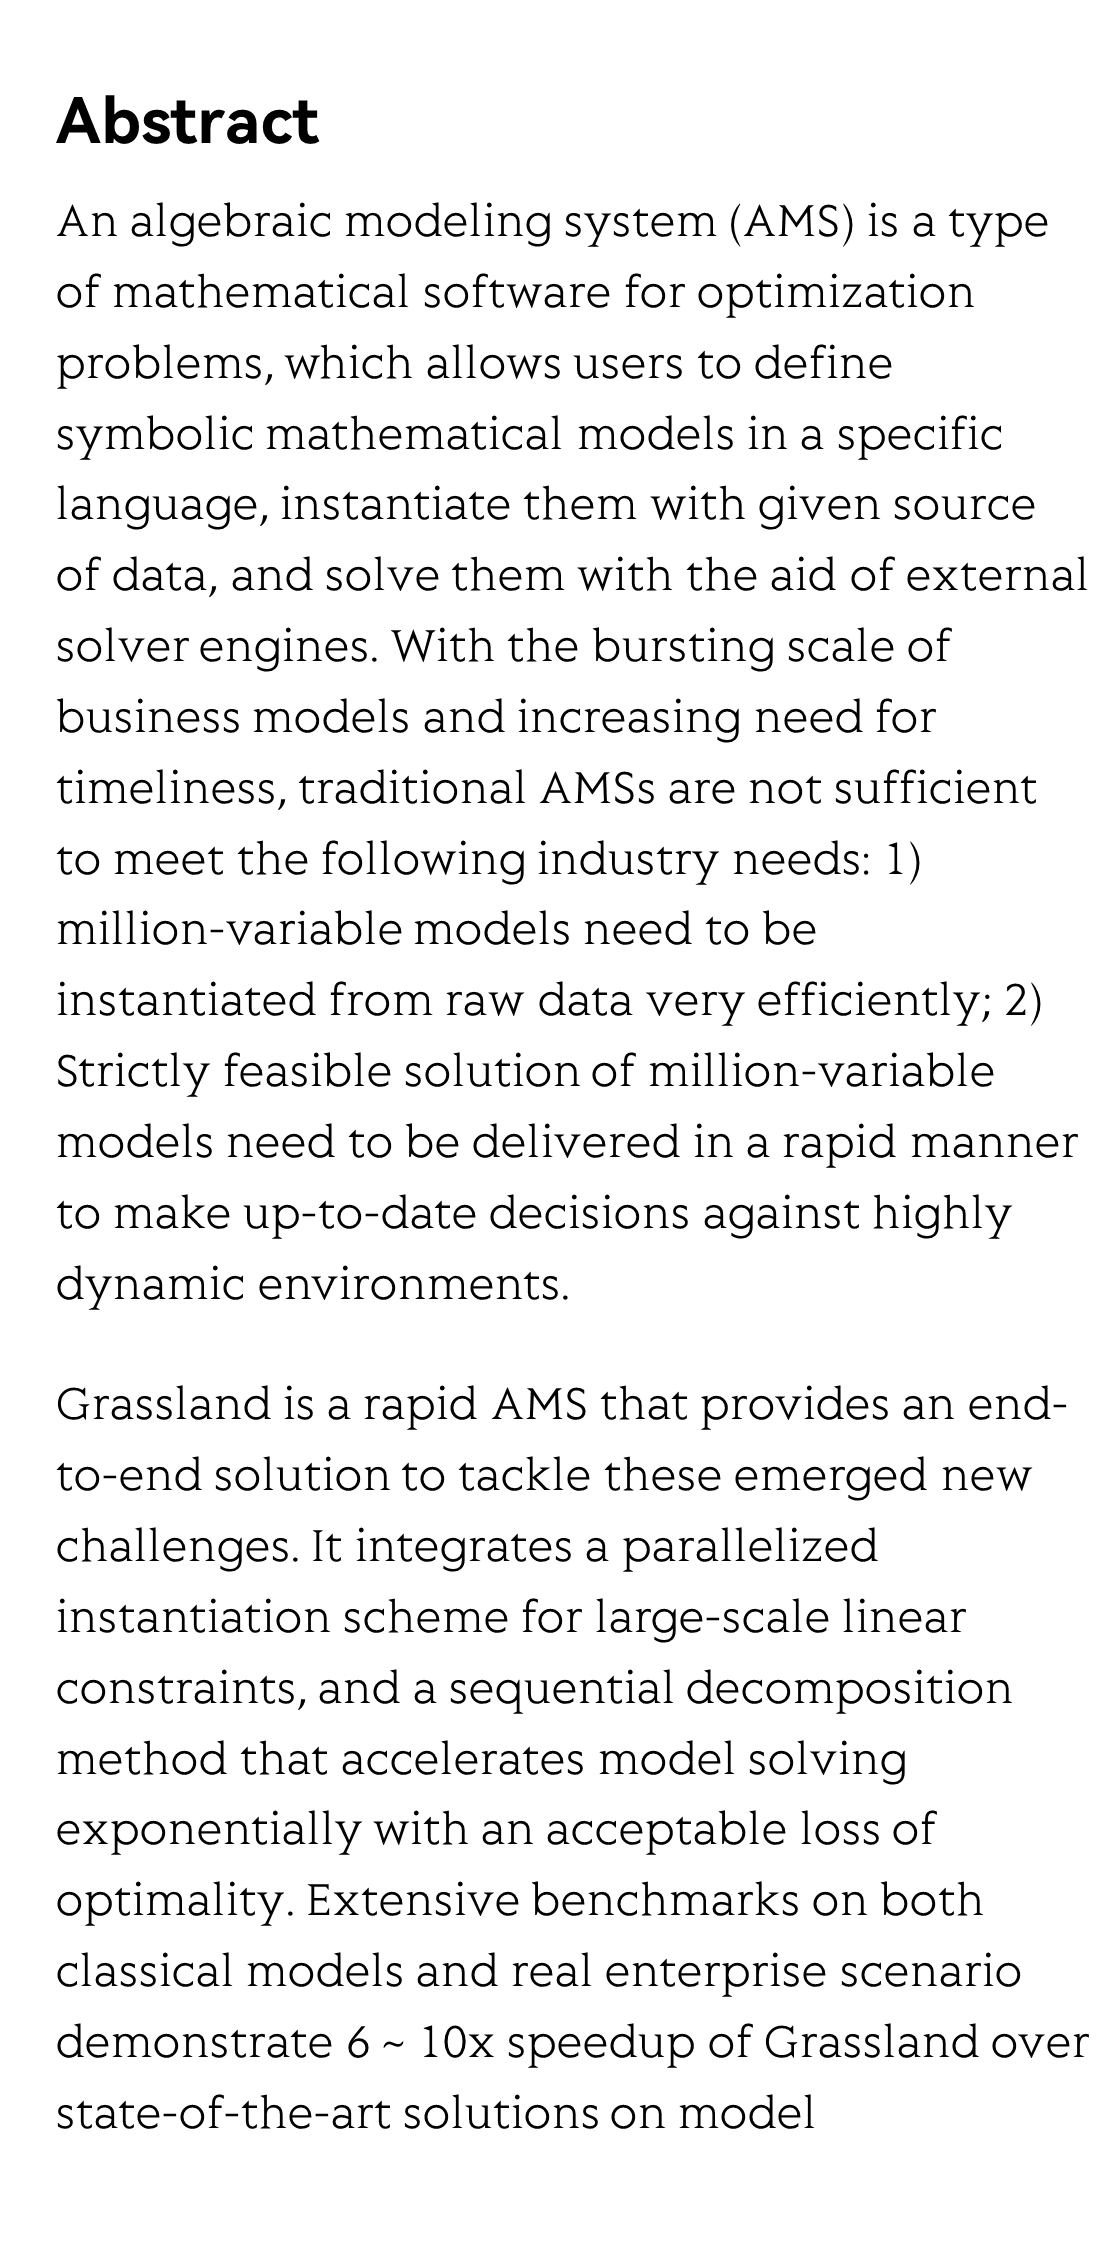 Grassland: A Rapid Algebraic Modeling System for Million-variable Optimization_2